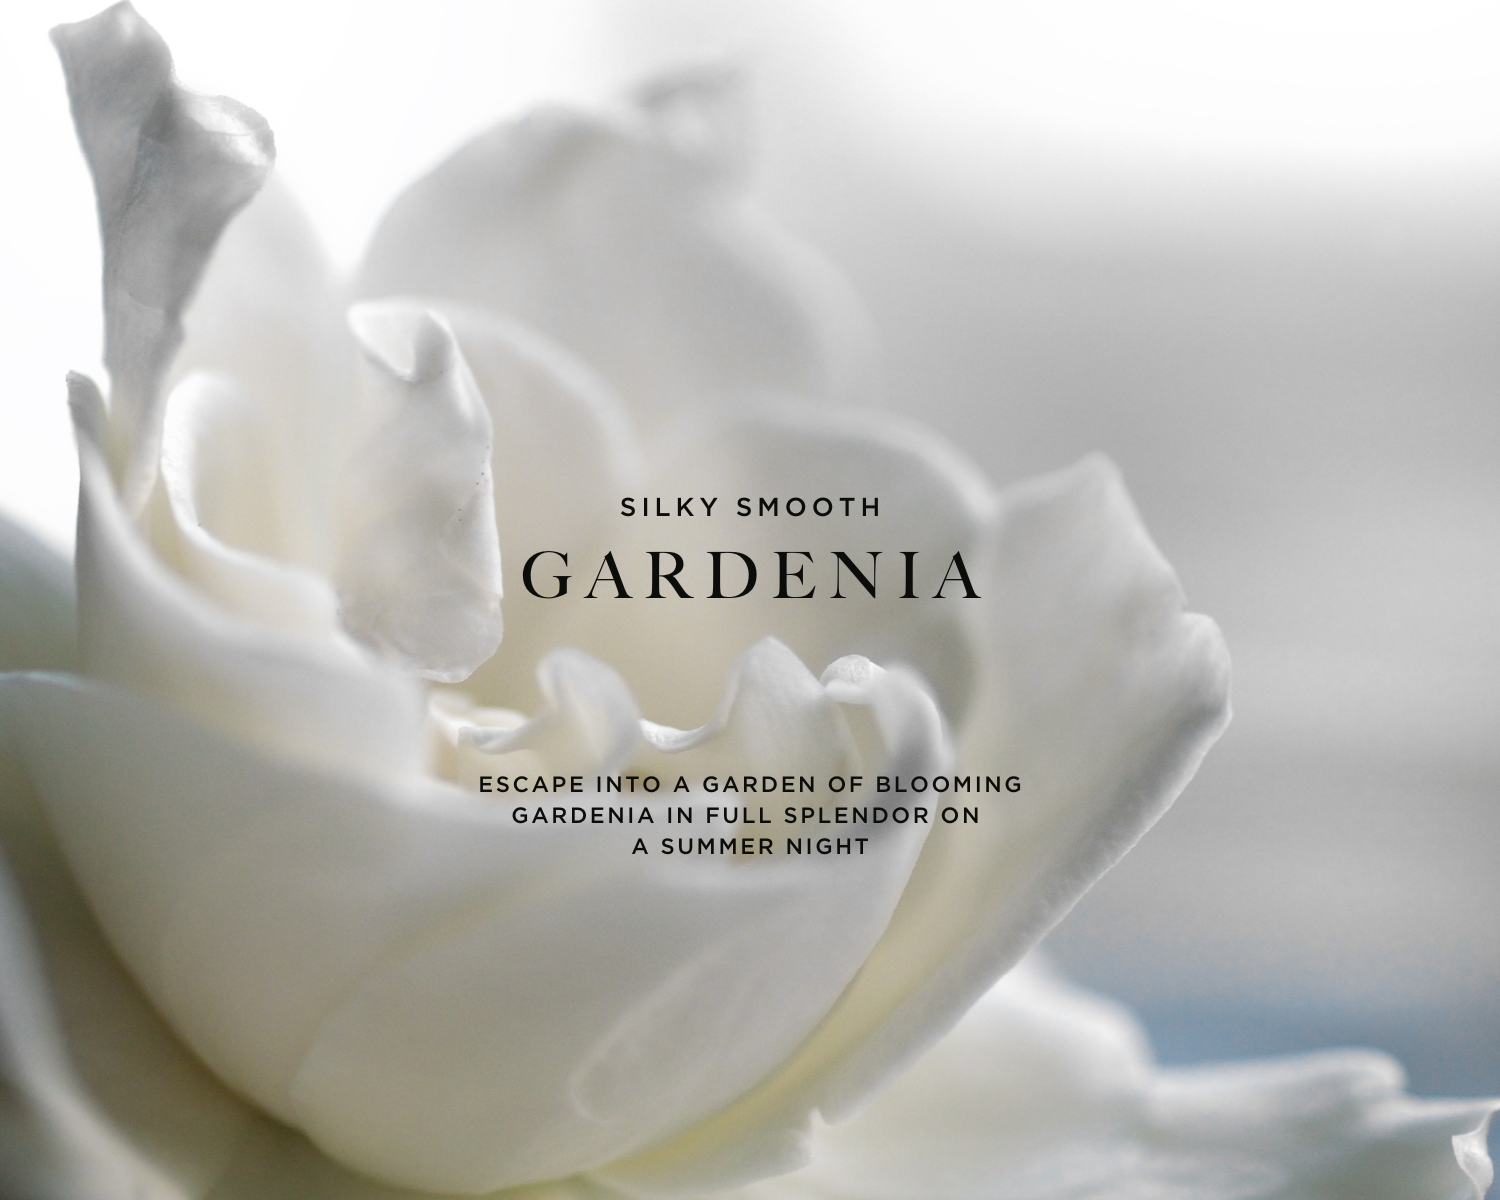 Caswell-Massey Gardenia Eau de Toilette for Women: image of gardenias and gardenia petals to represent the primary scent note